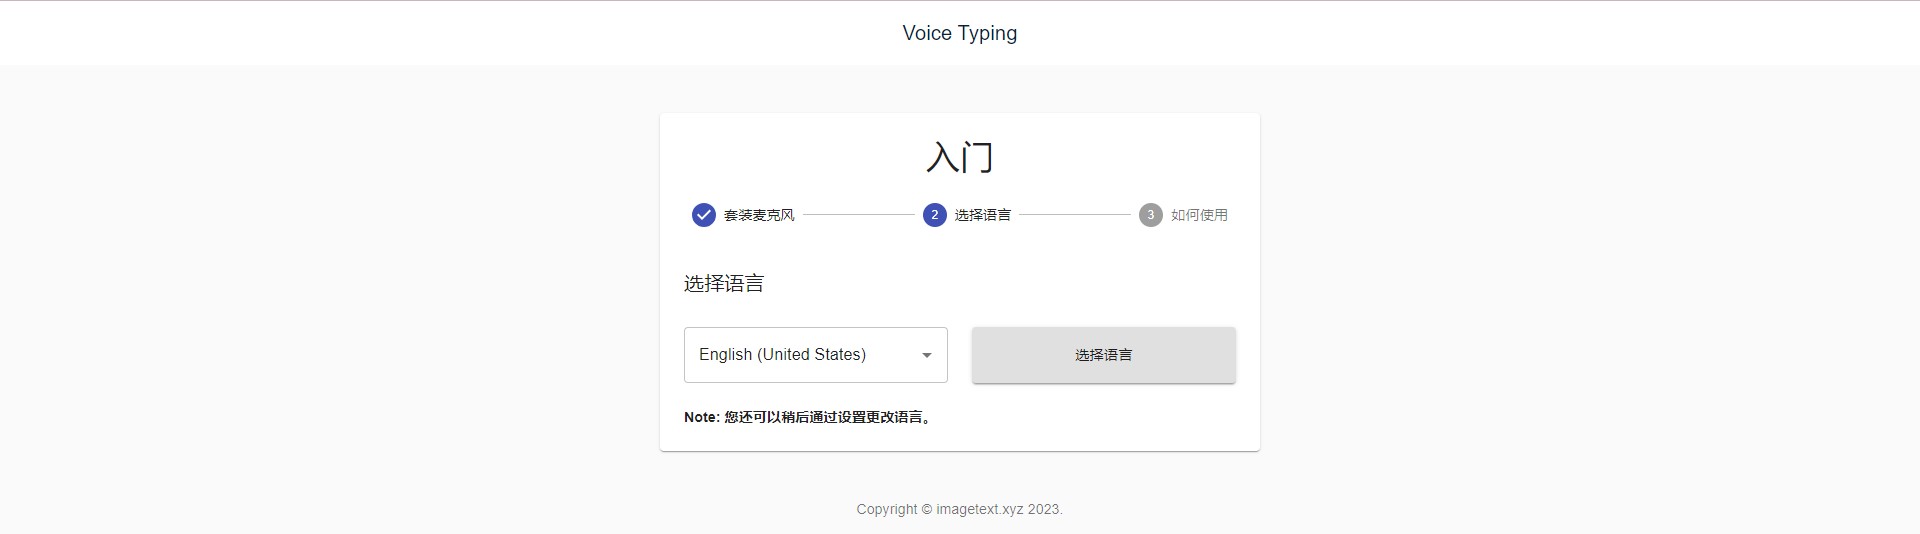 Voice Typing 插件使用教程